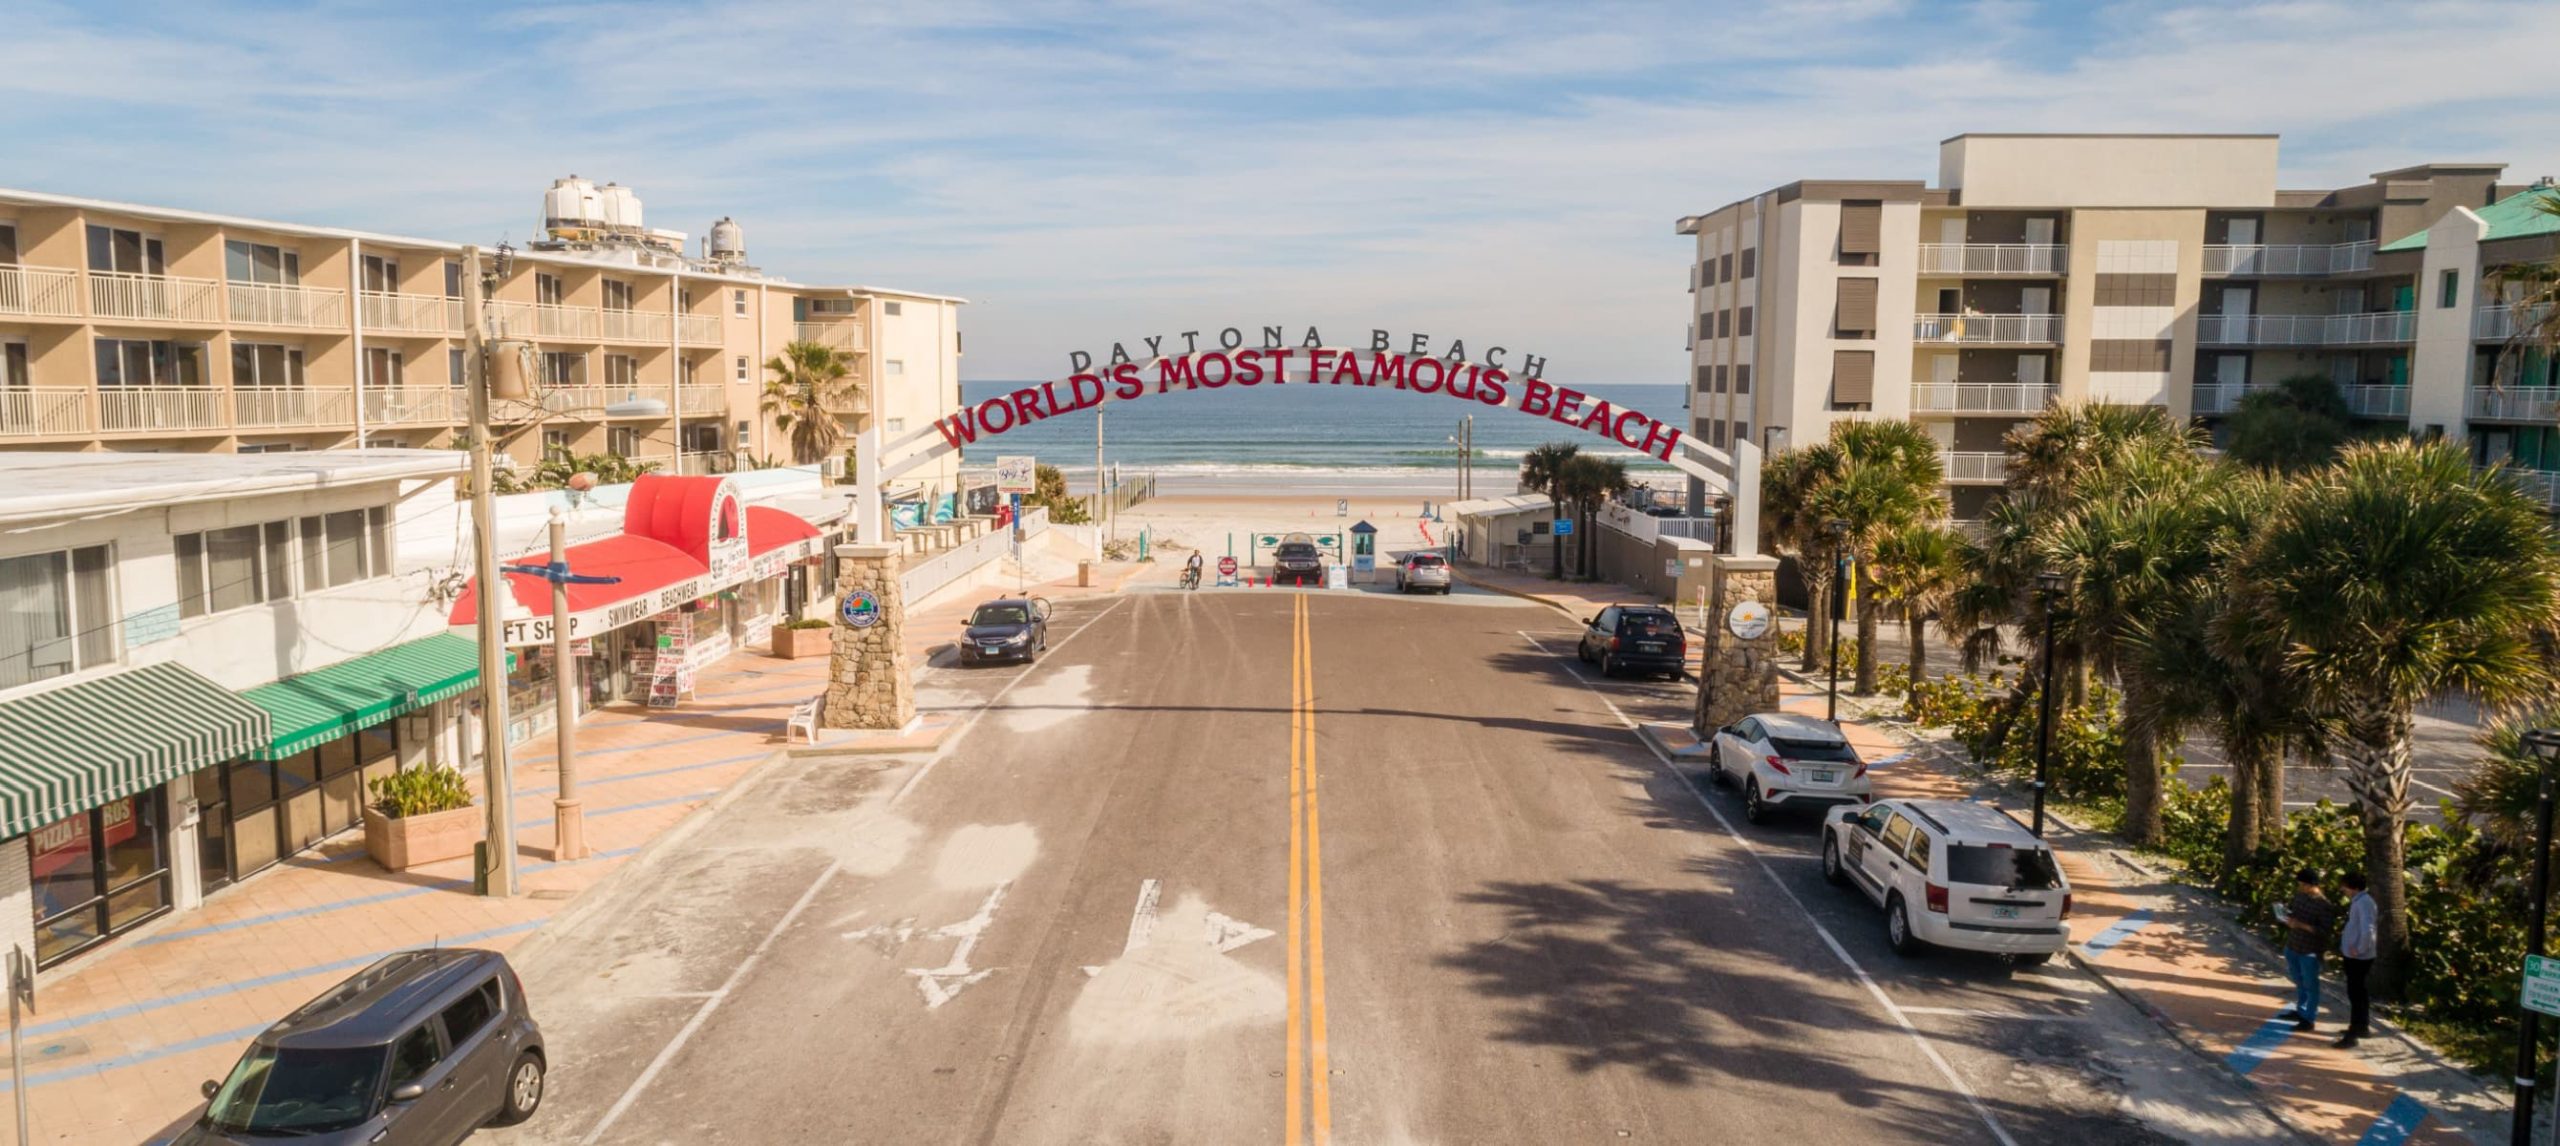 The Best Daytona Beach Hotels